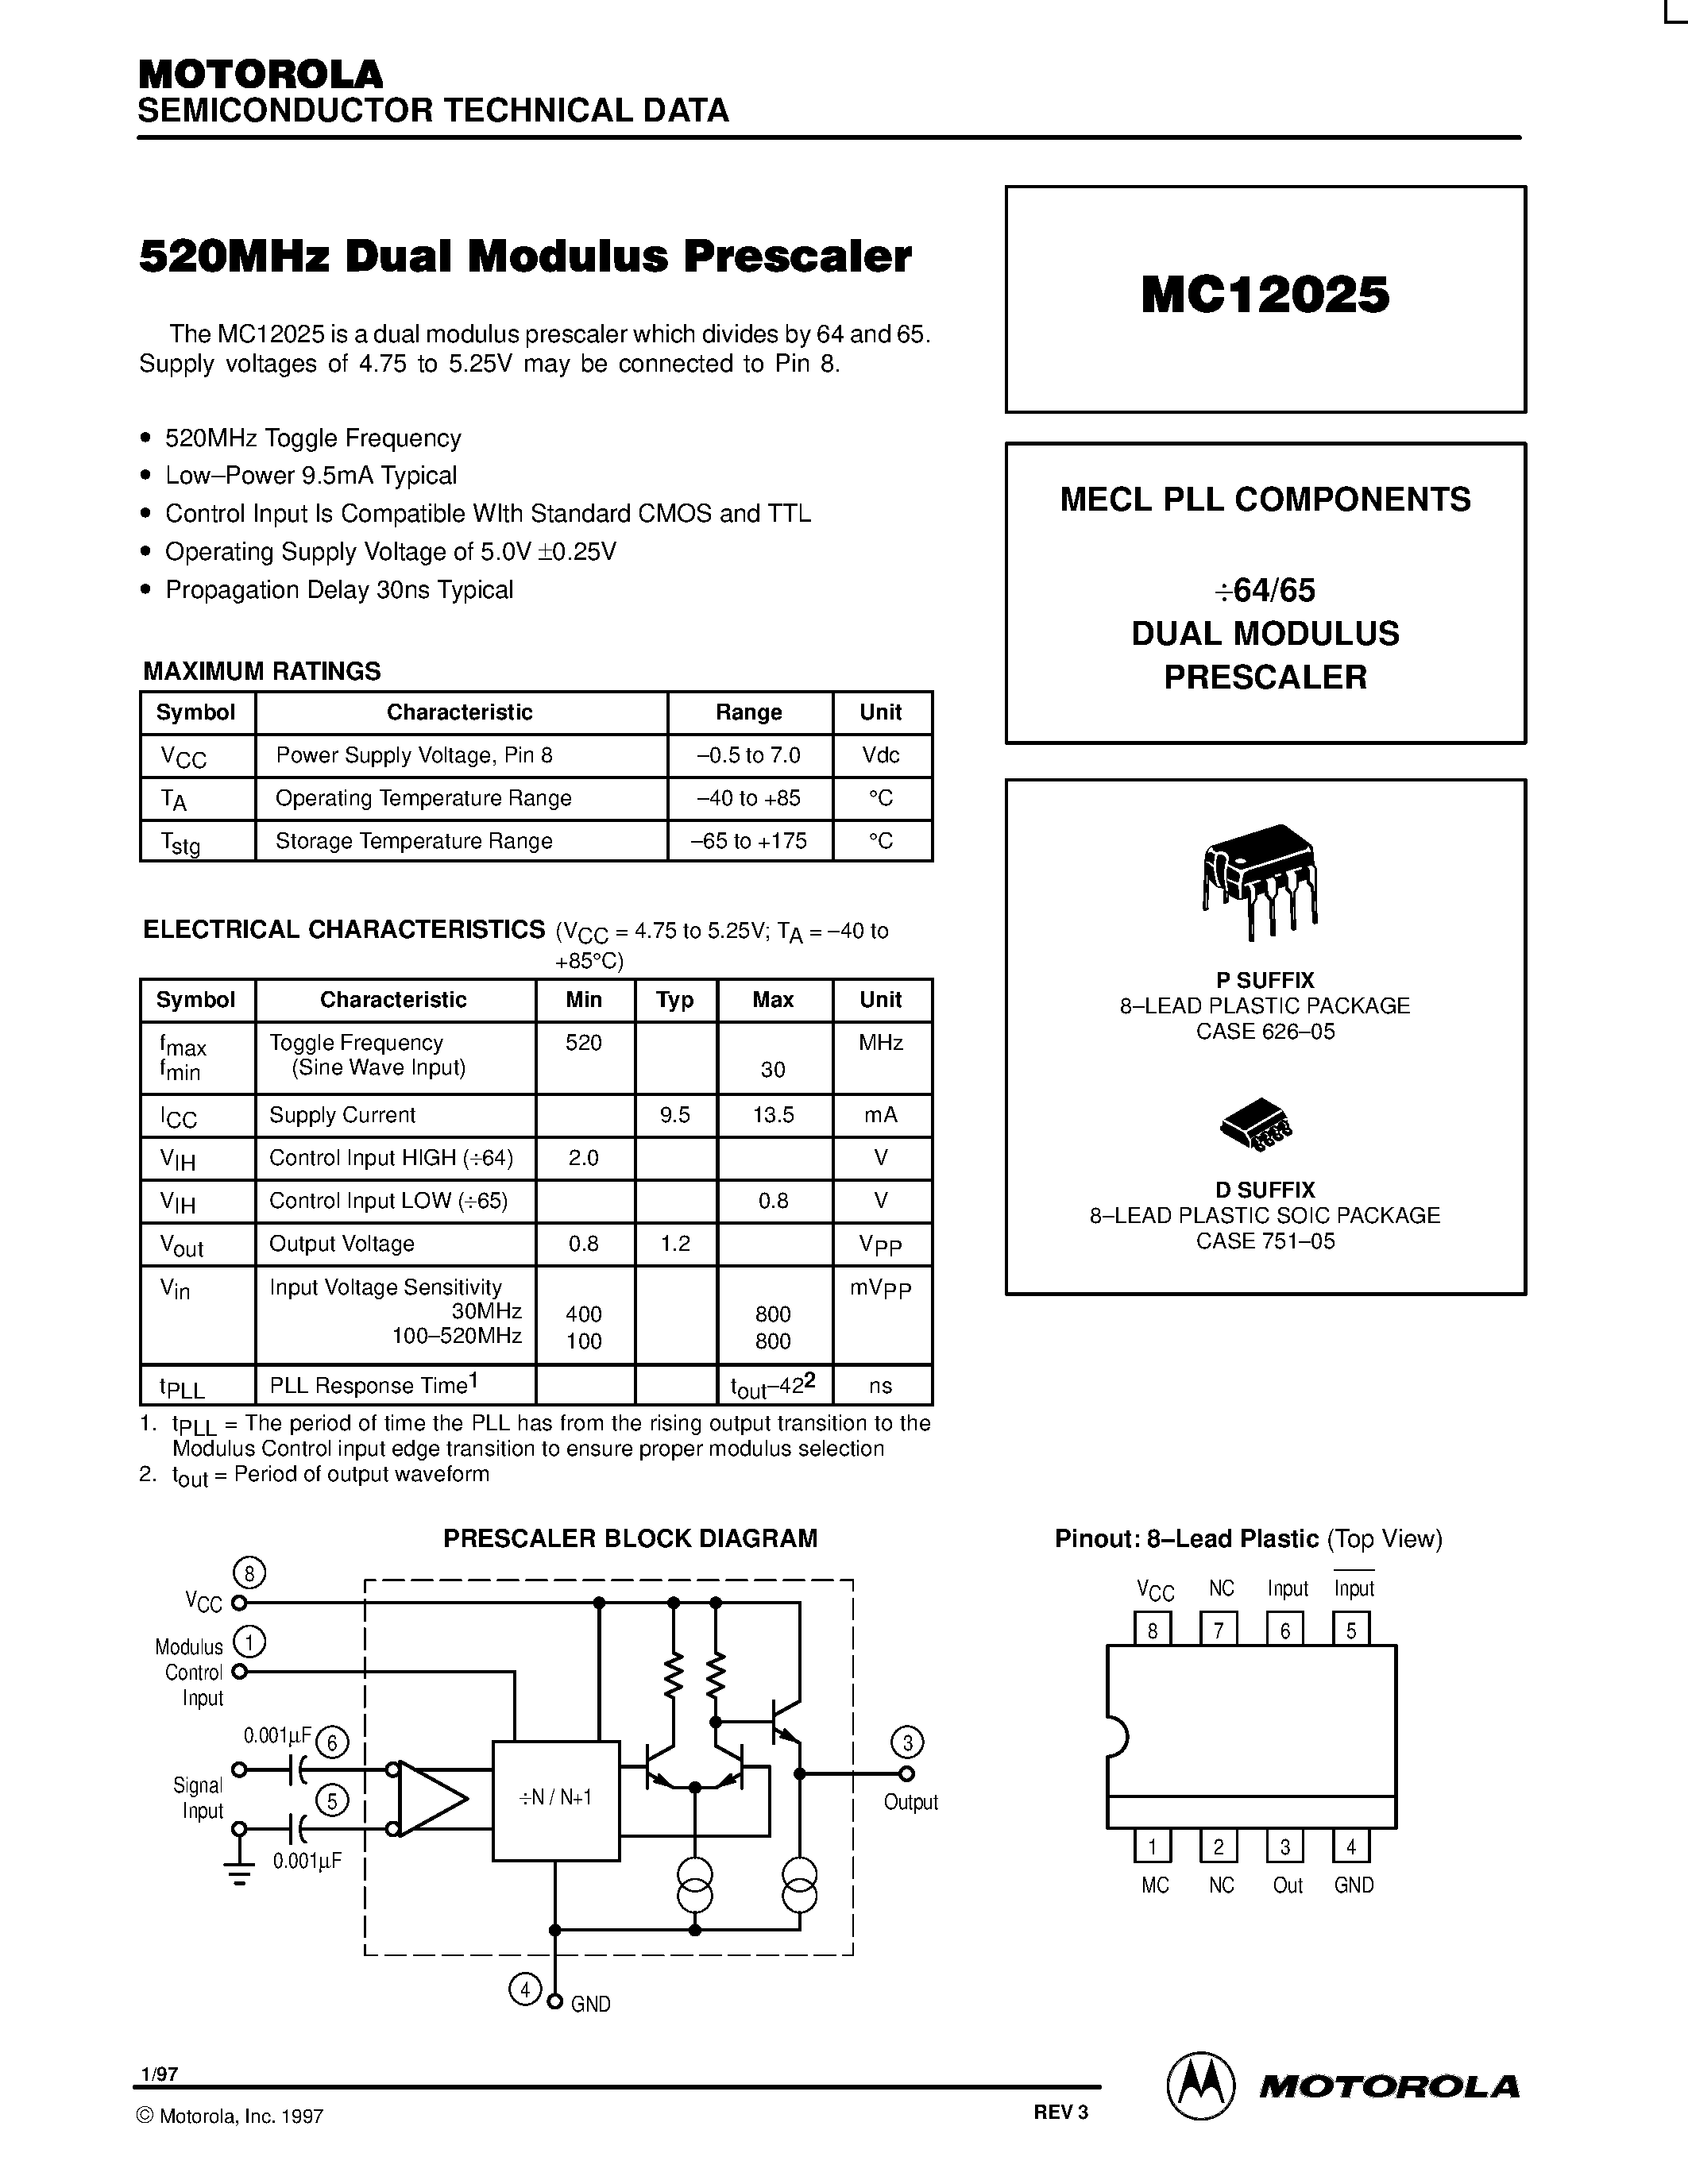 Datasheet MC12025 - MECL PLL COMPONENTS 64/65 DUAL MODULUS PRESCALER page 1